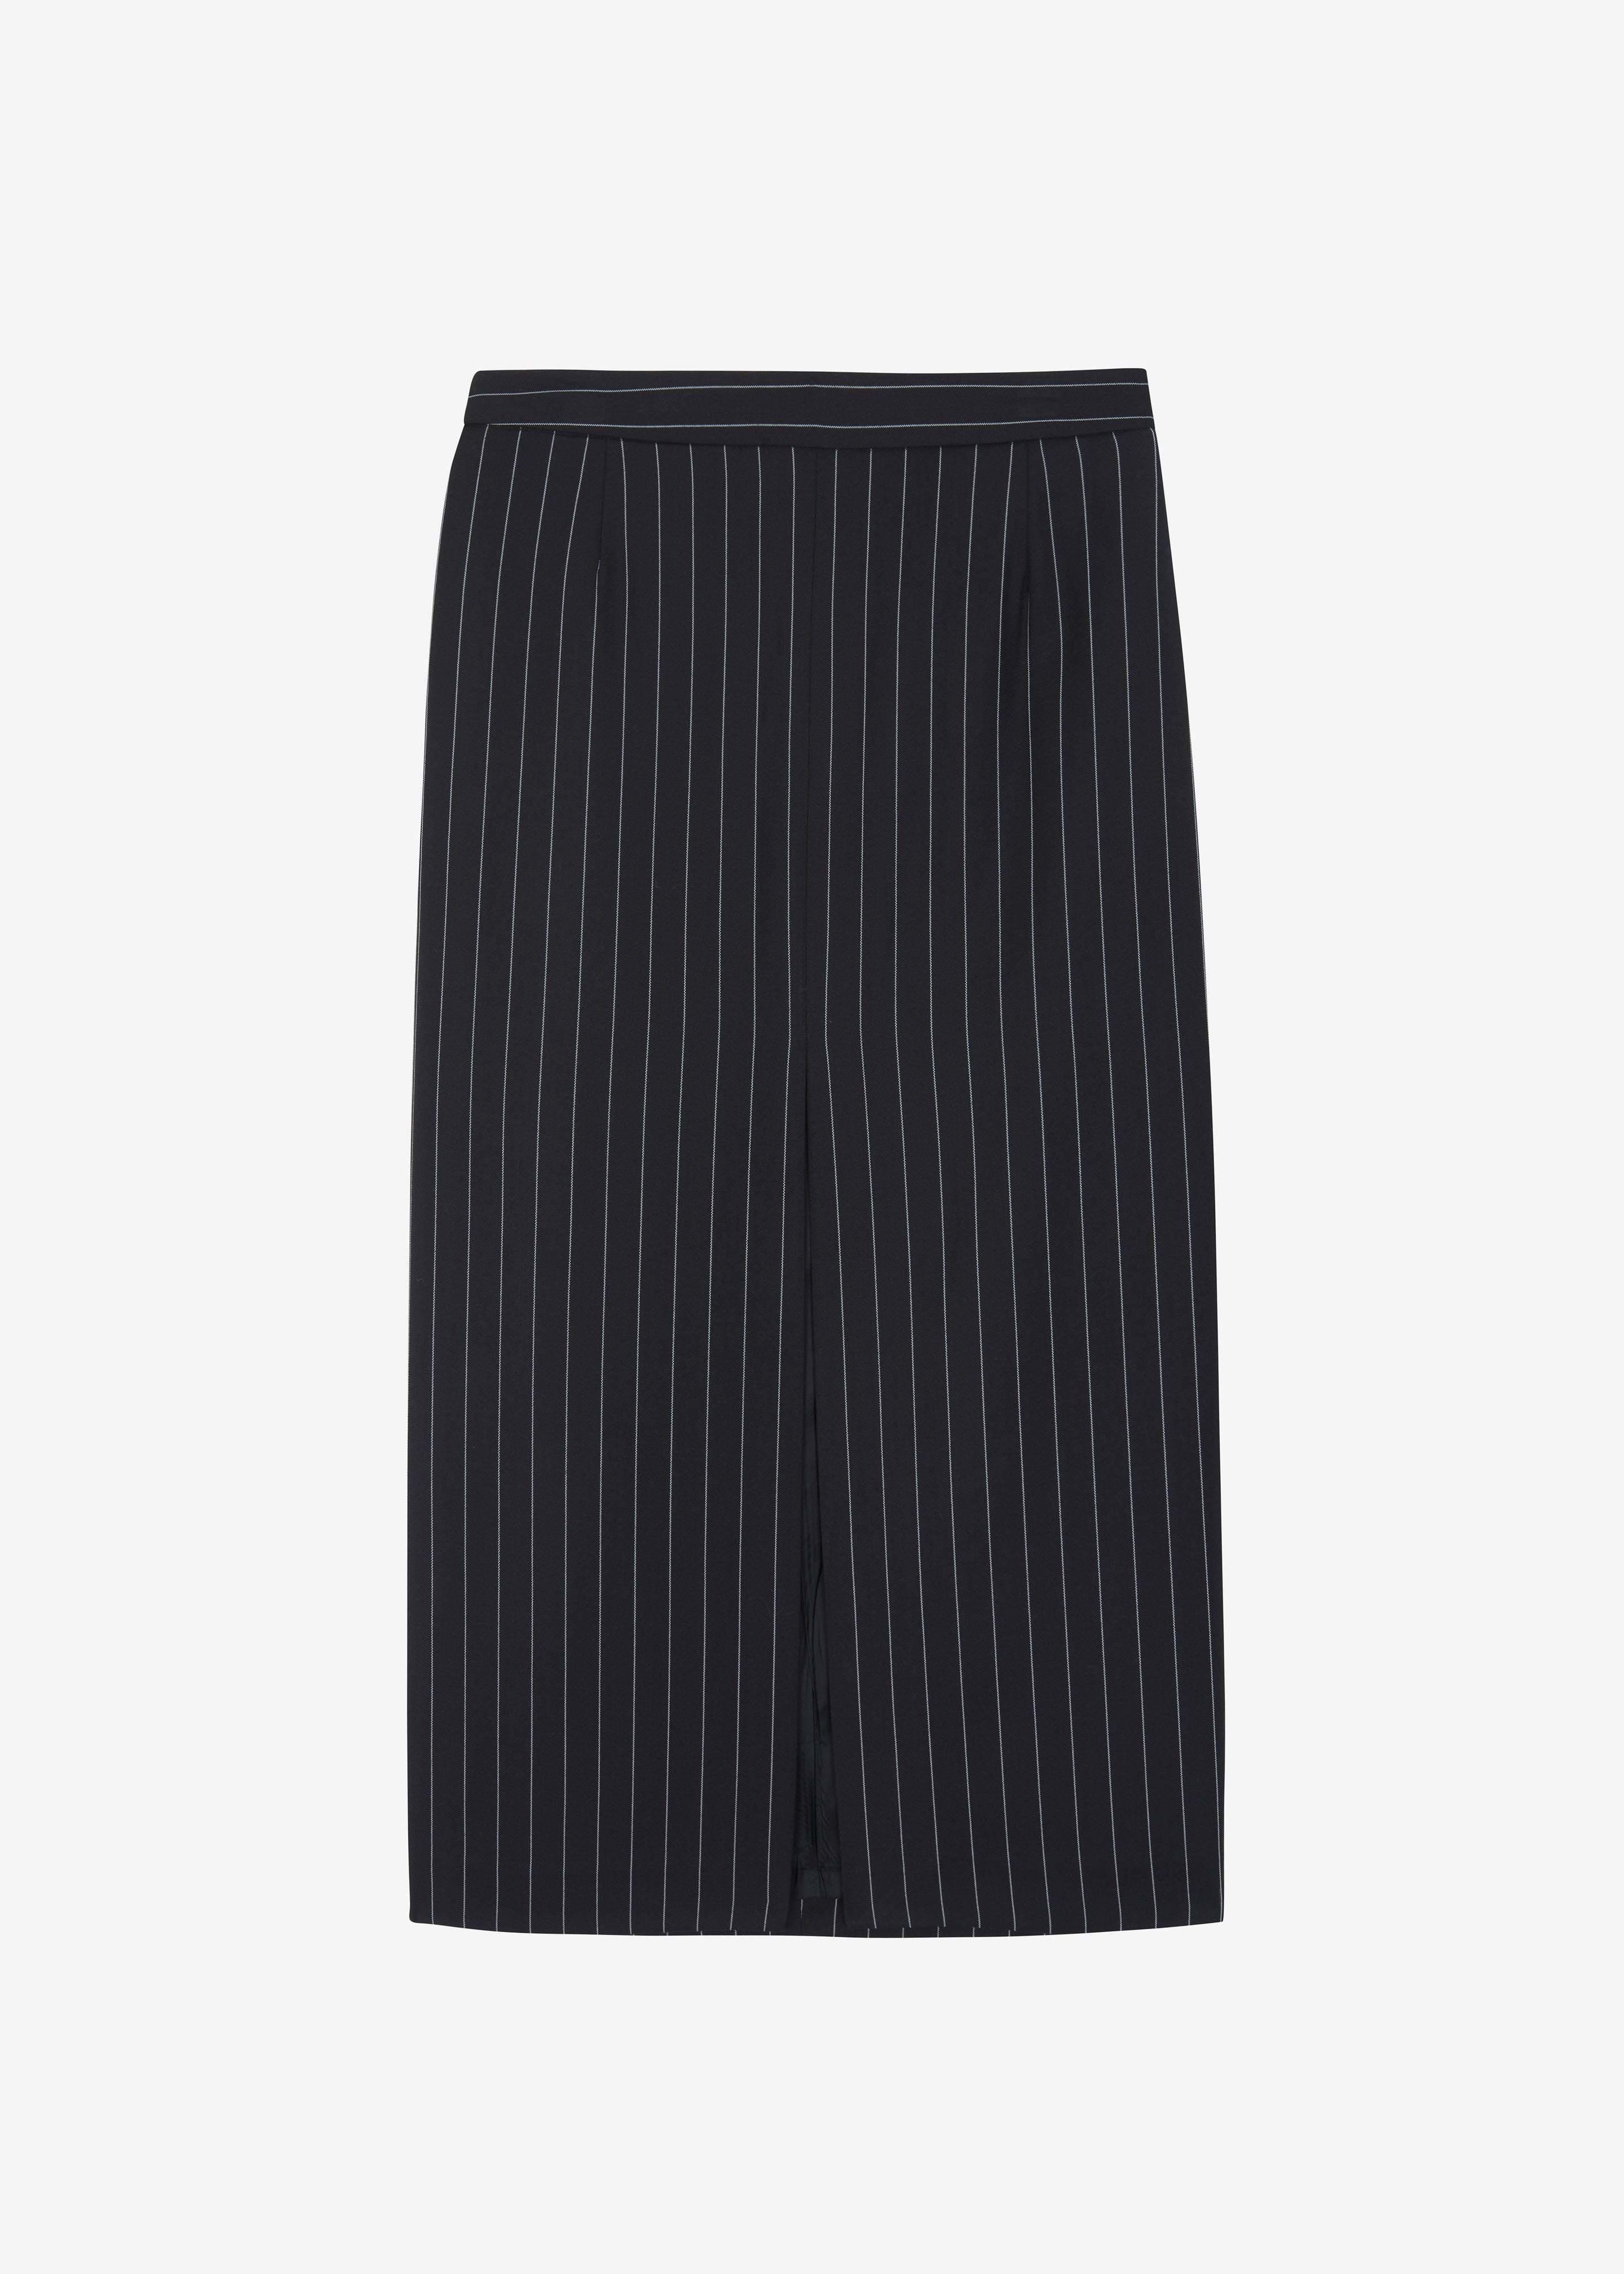 Holland Midi Slit Skirt - Black/White Pinstripe - 14